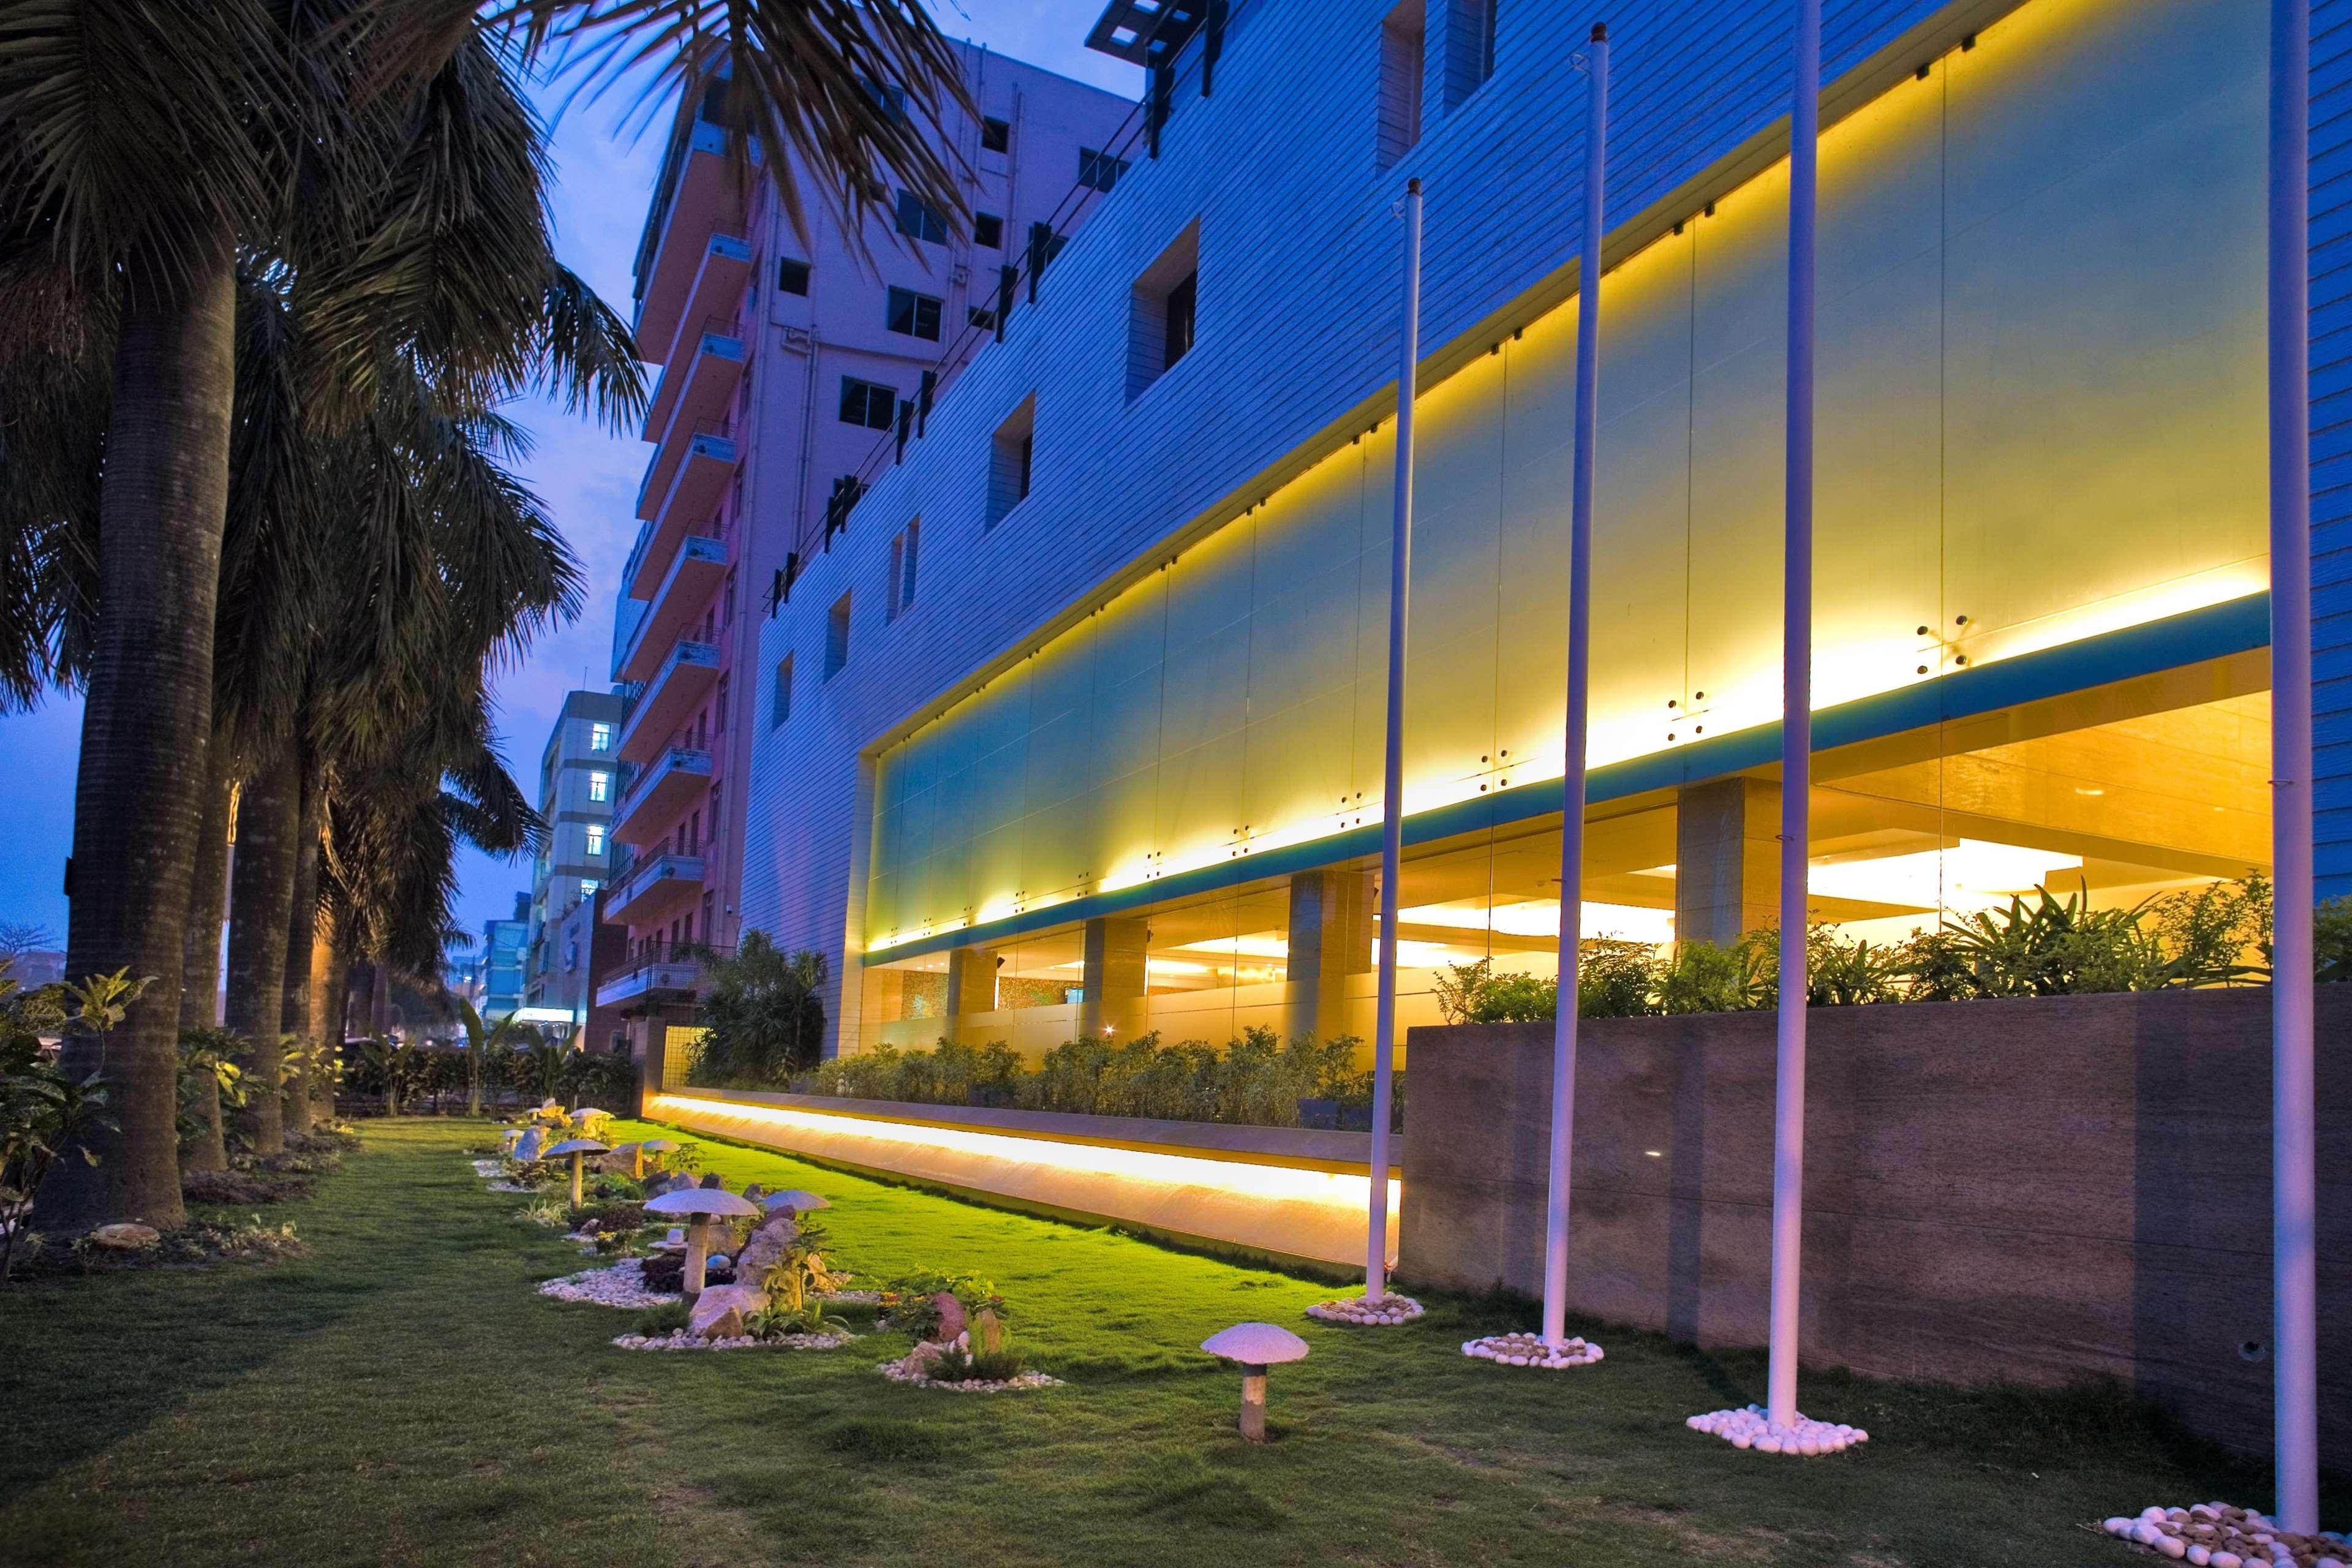 The Sonnet Kolkata Hotel Exterior photo